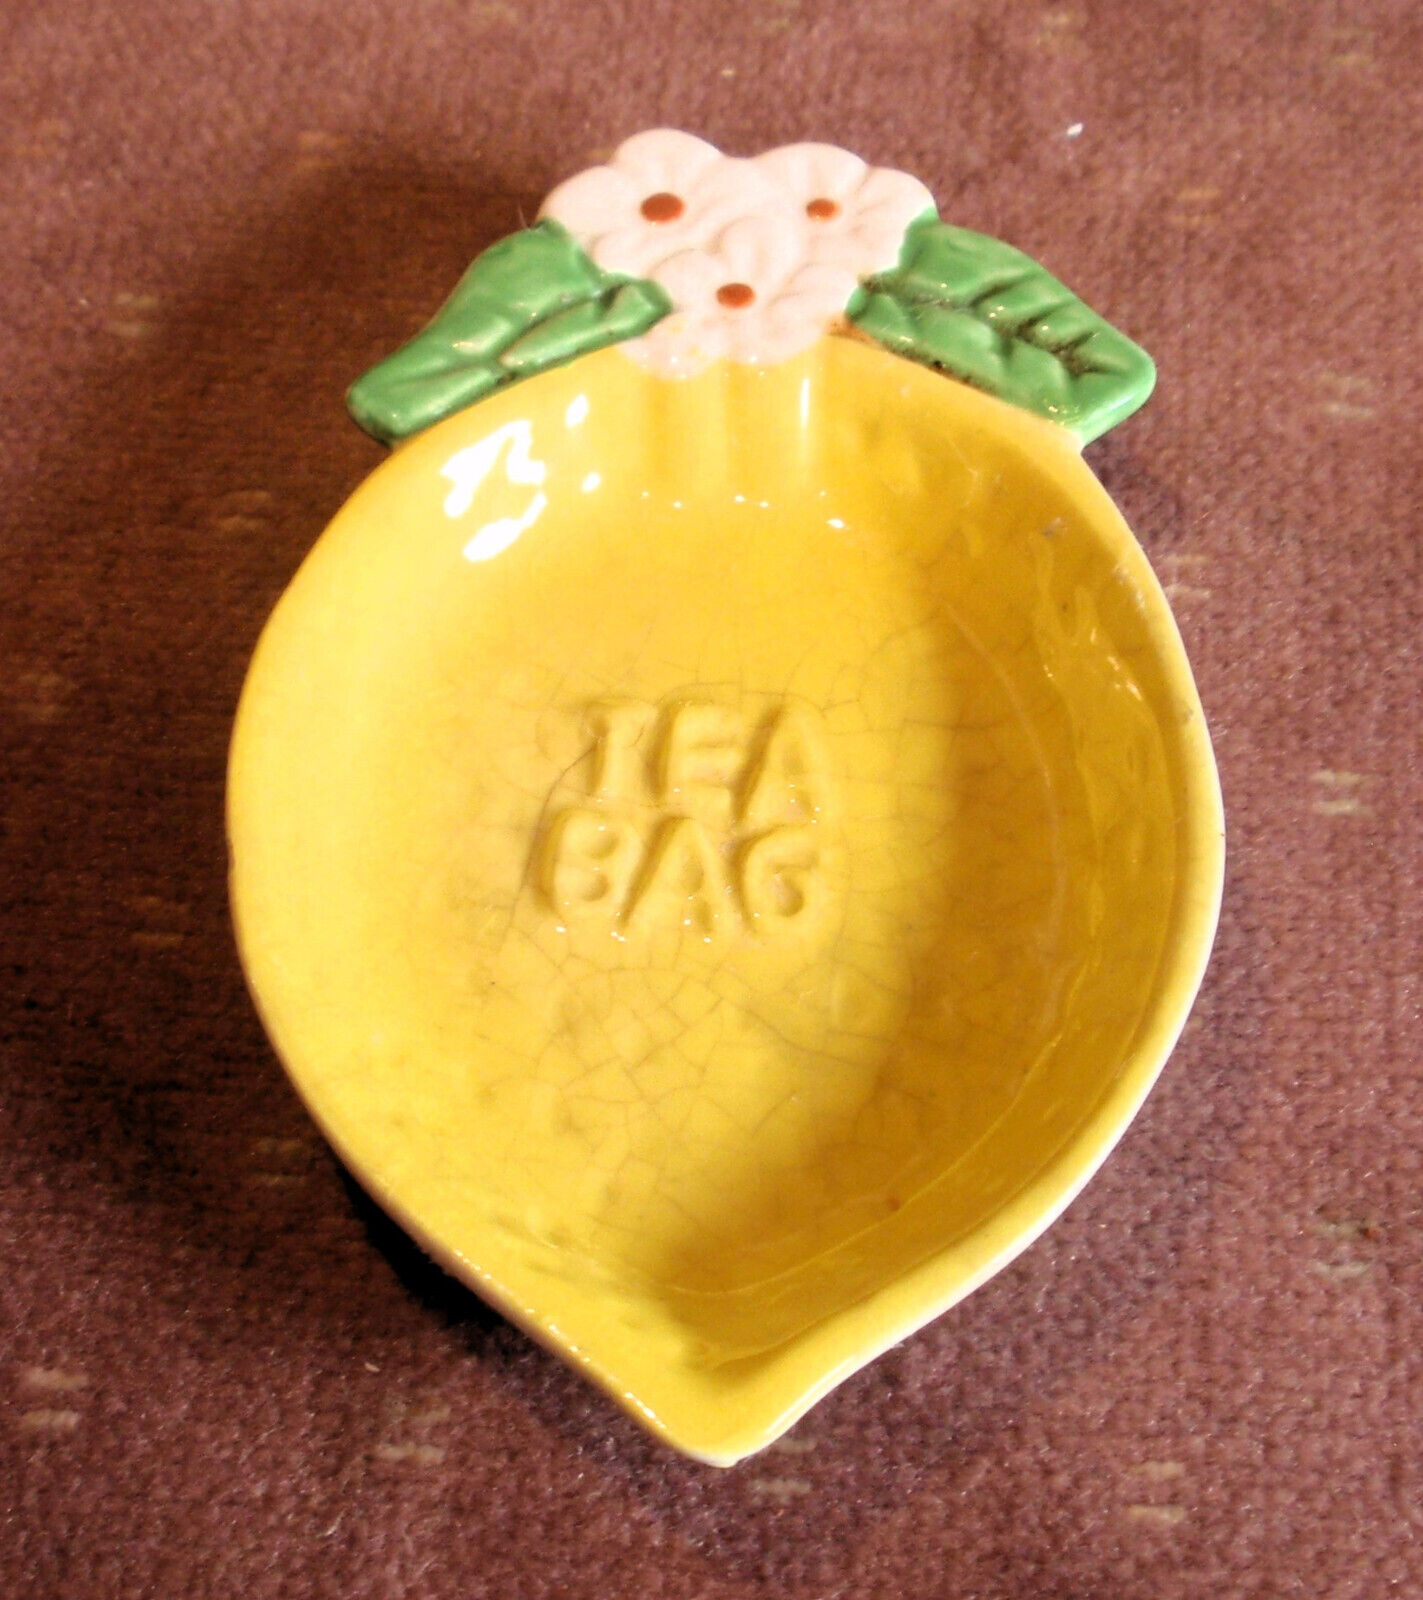 Vintage Ceramic Josef Originals Ceramic Tea Bag Holder, Yellow Lemon Shape